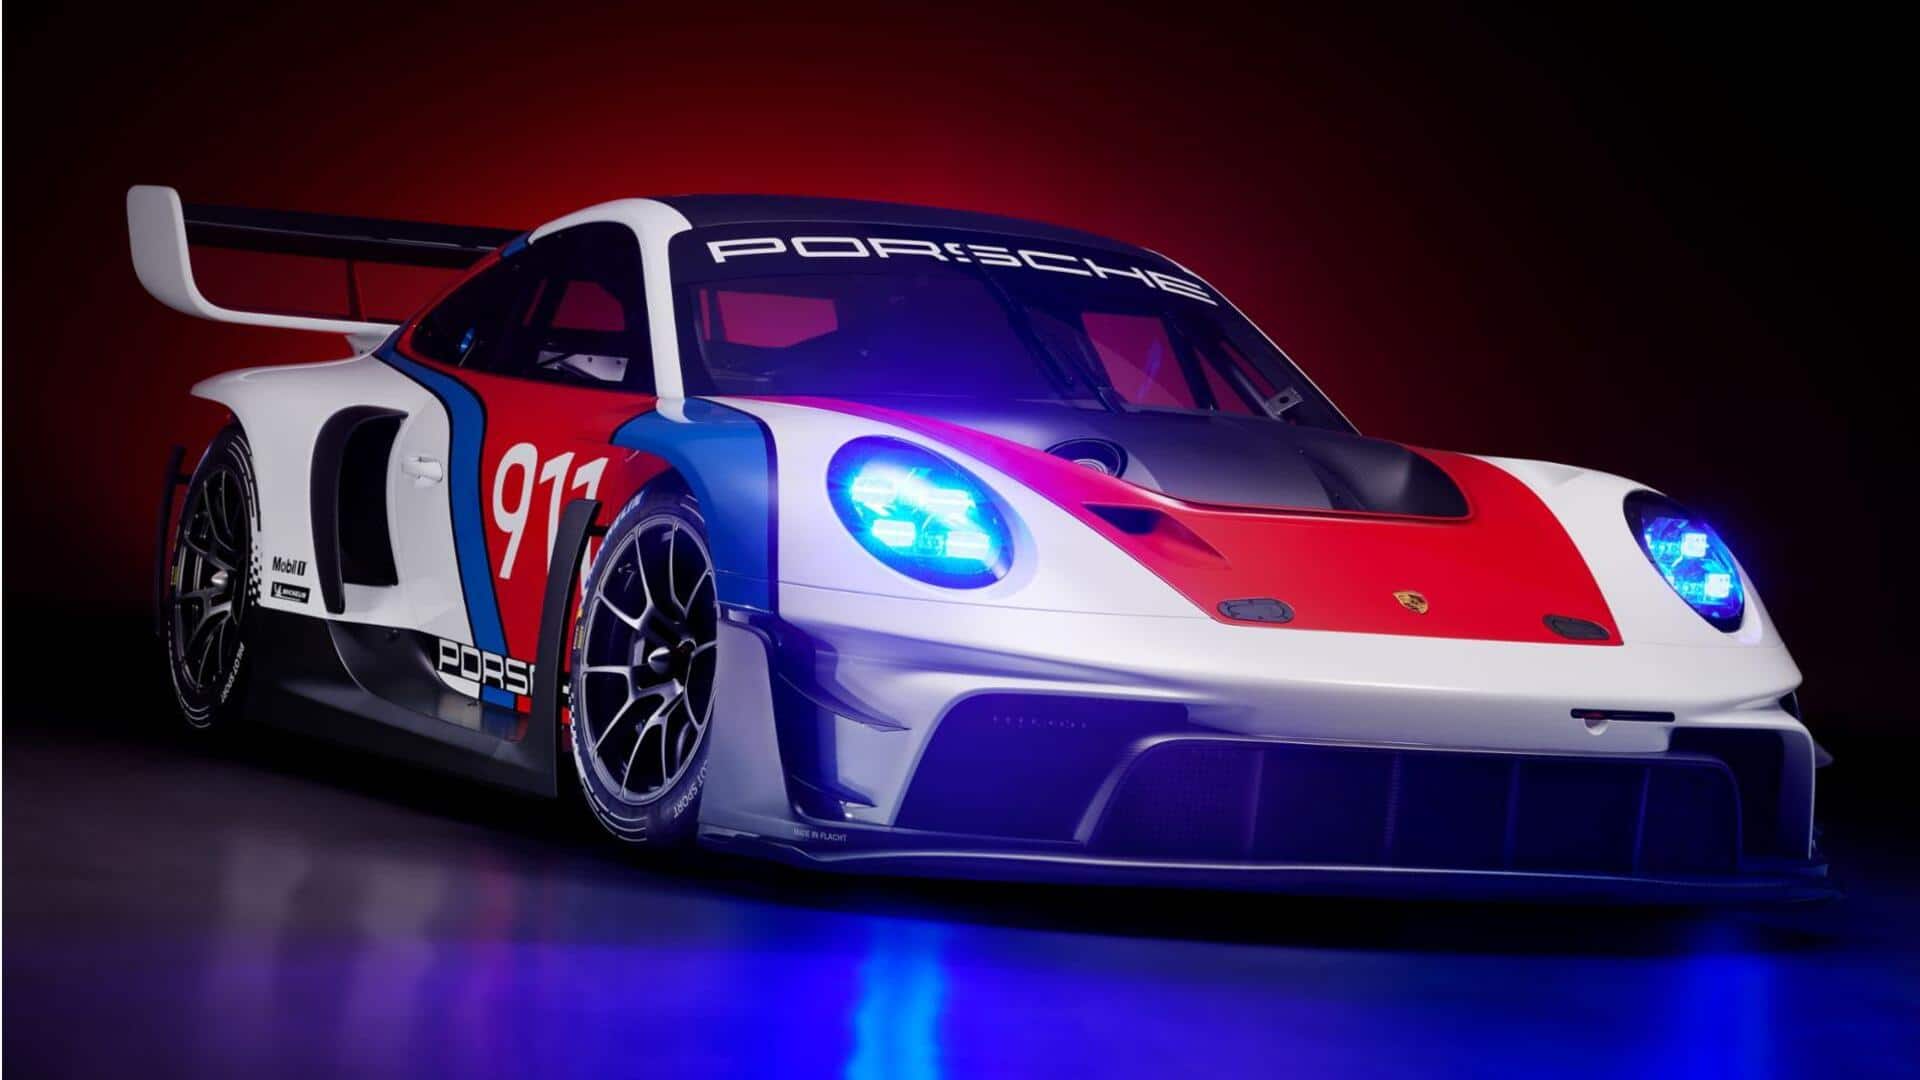 Limited-run Porsche 911 GT3 R race car revealed: Check features